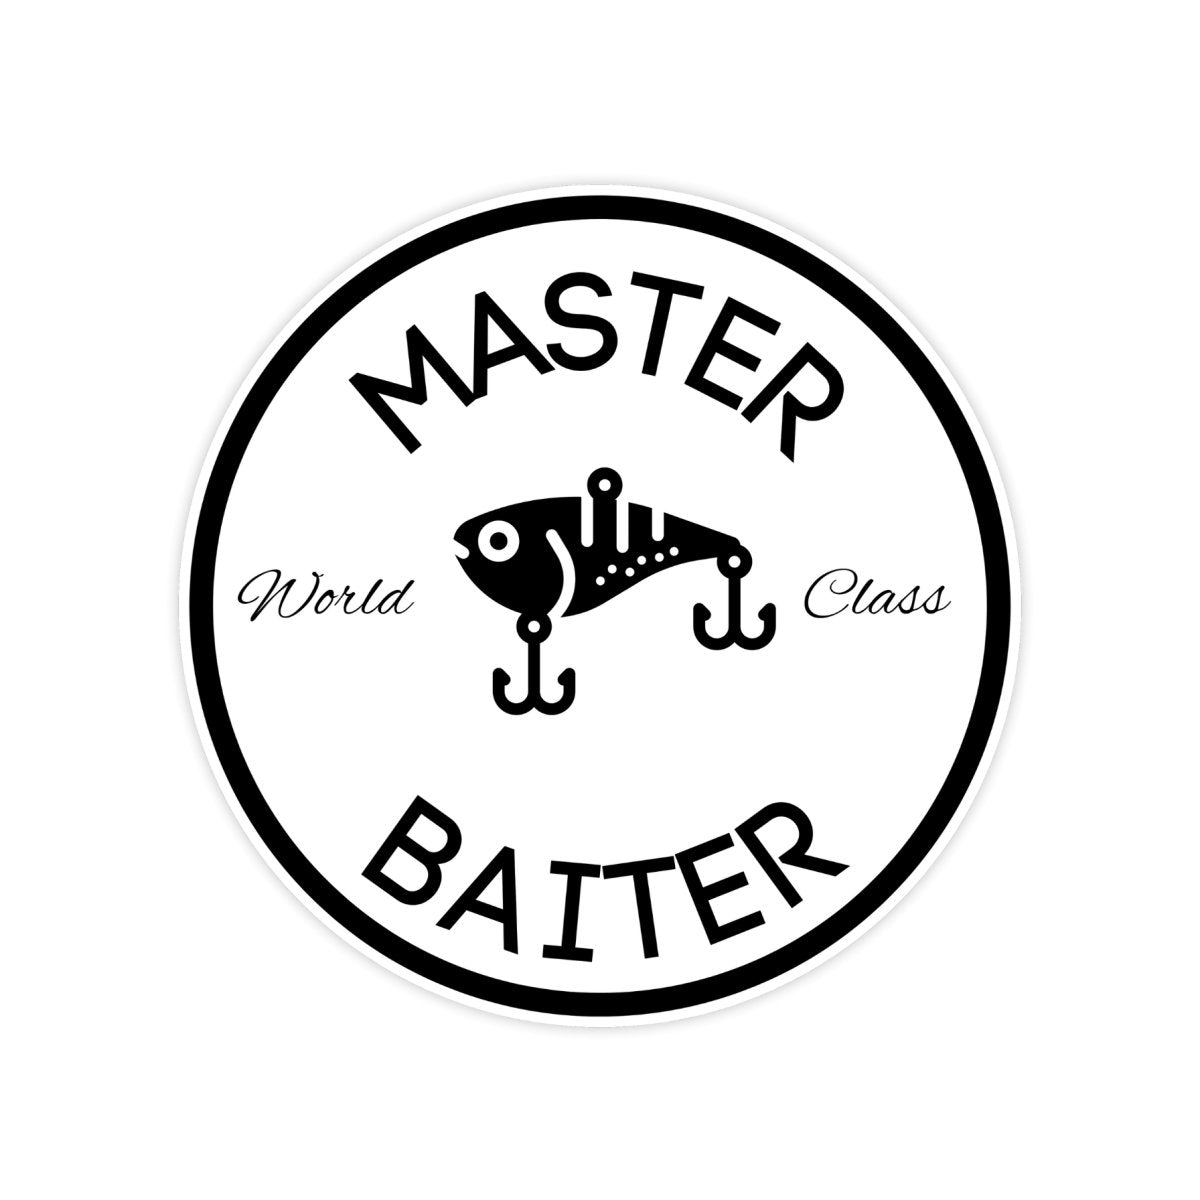 World Class Master Baiter Sticker - Funny Meme Fishing Lure Decal